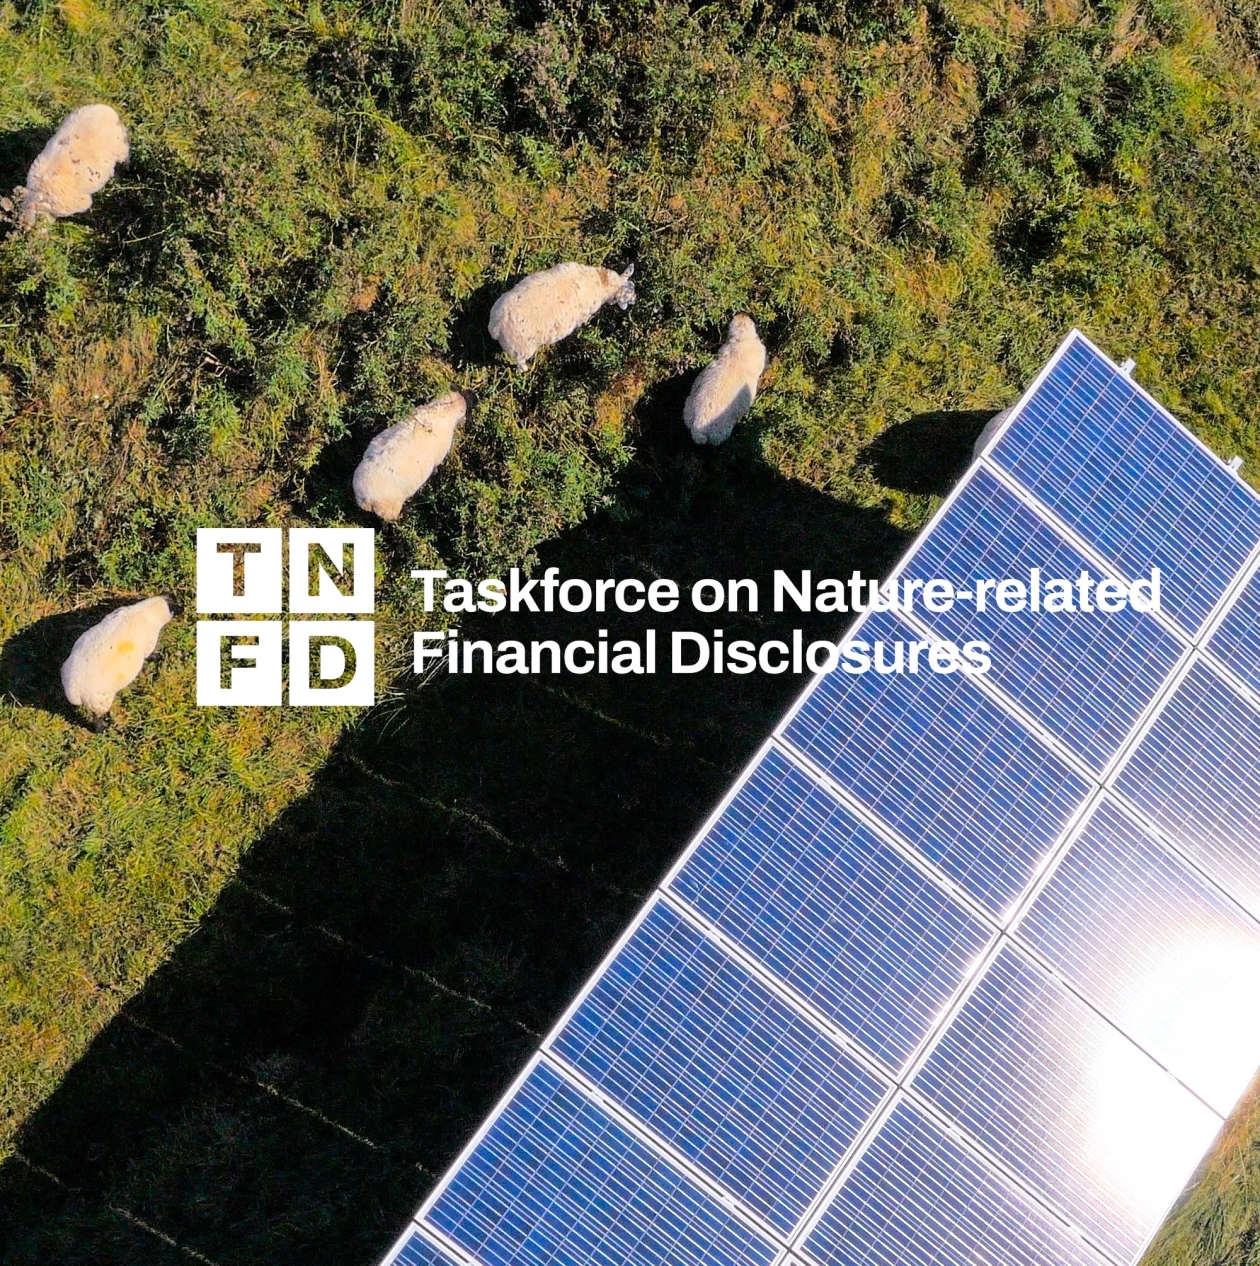 Low Carbon Solar Farm with TNFD logo